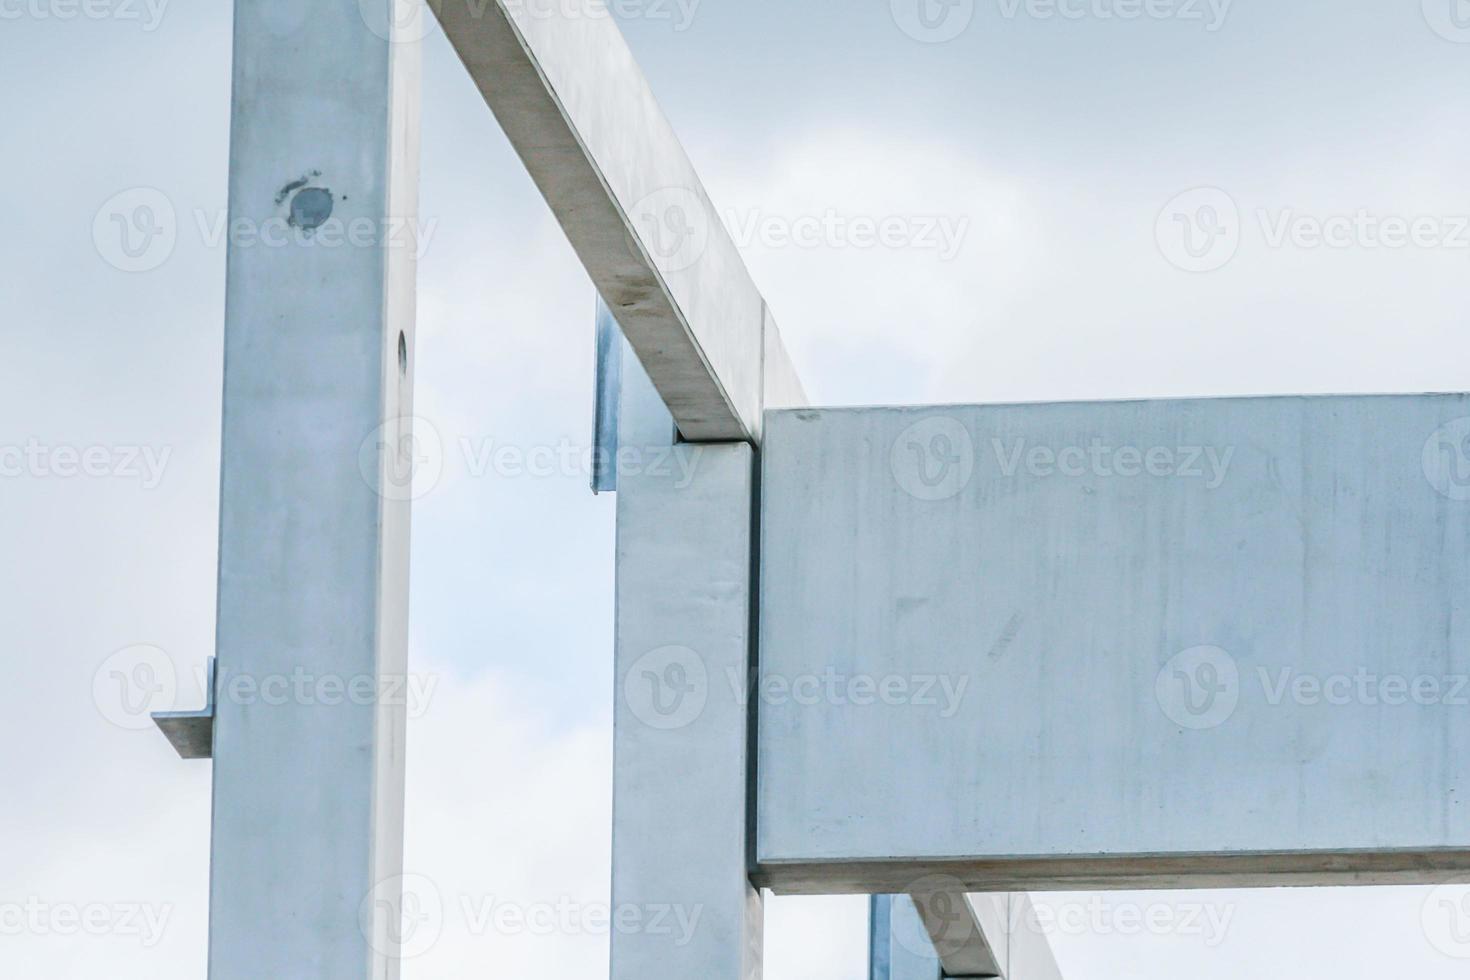 Precast concrete elements during installation on construction site photo